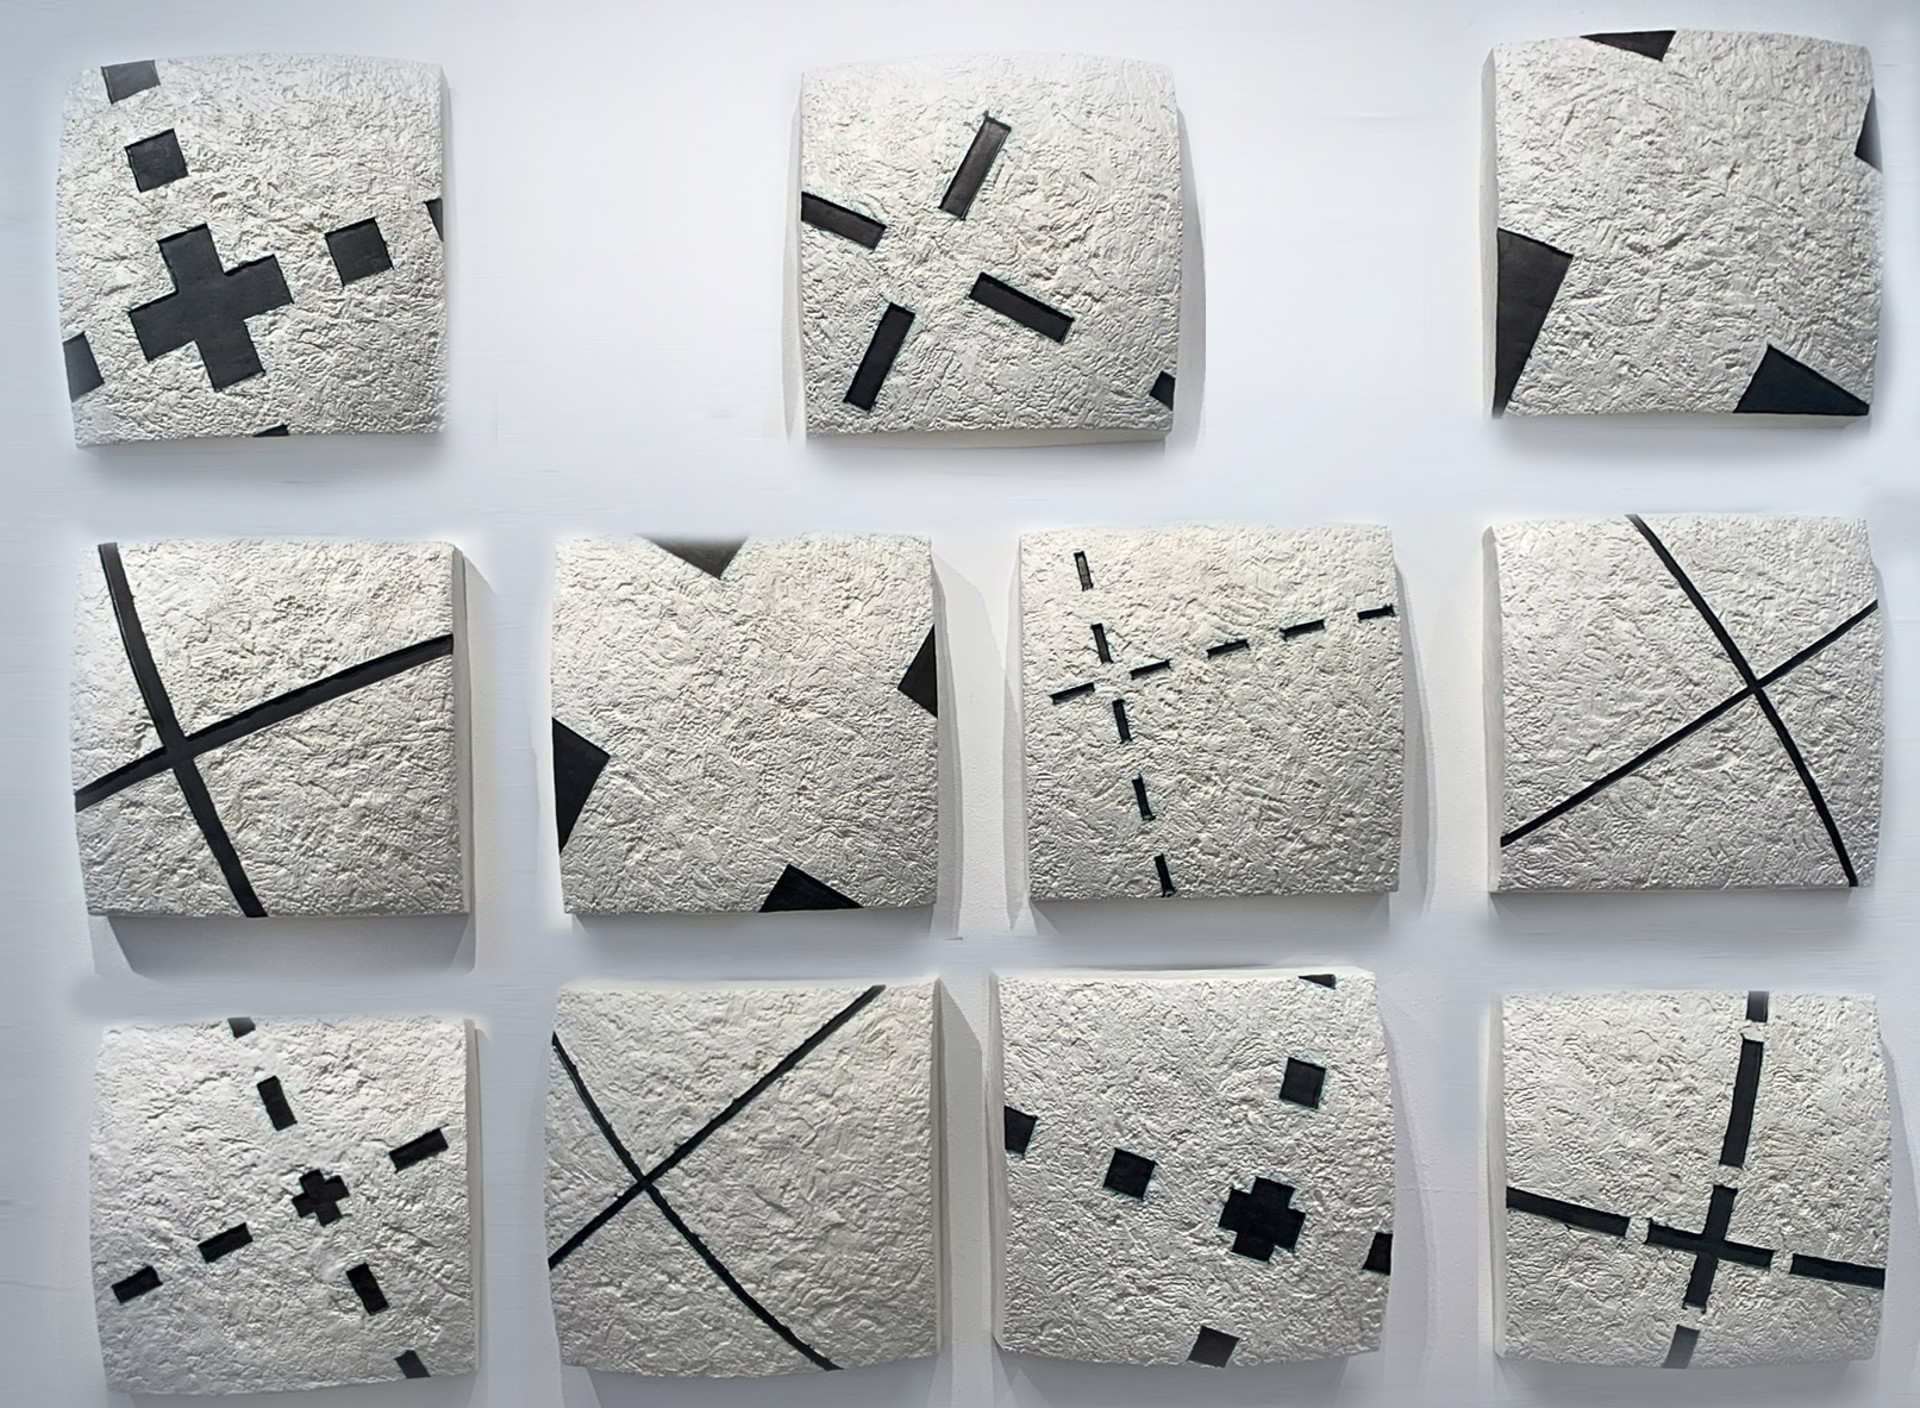 Series X (11 Panels) by Gregor Turk